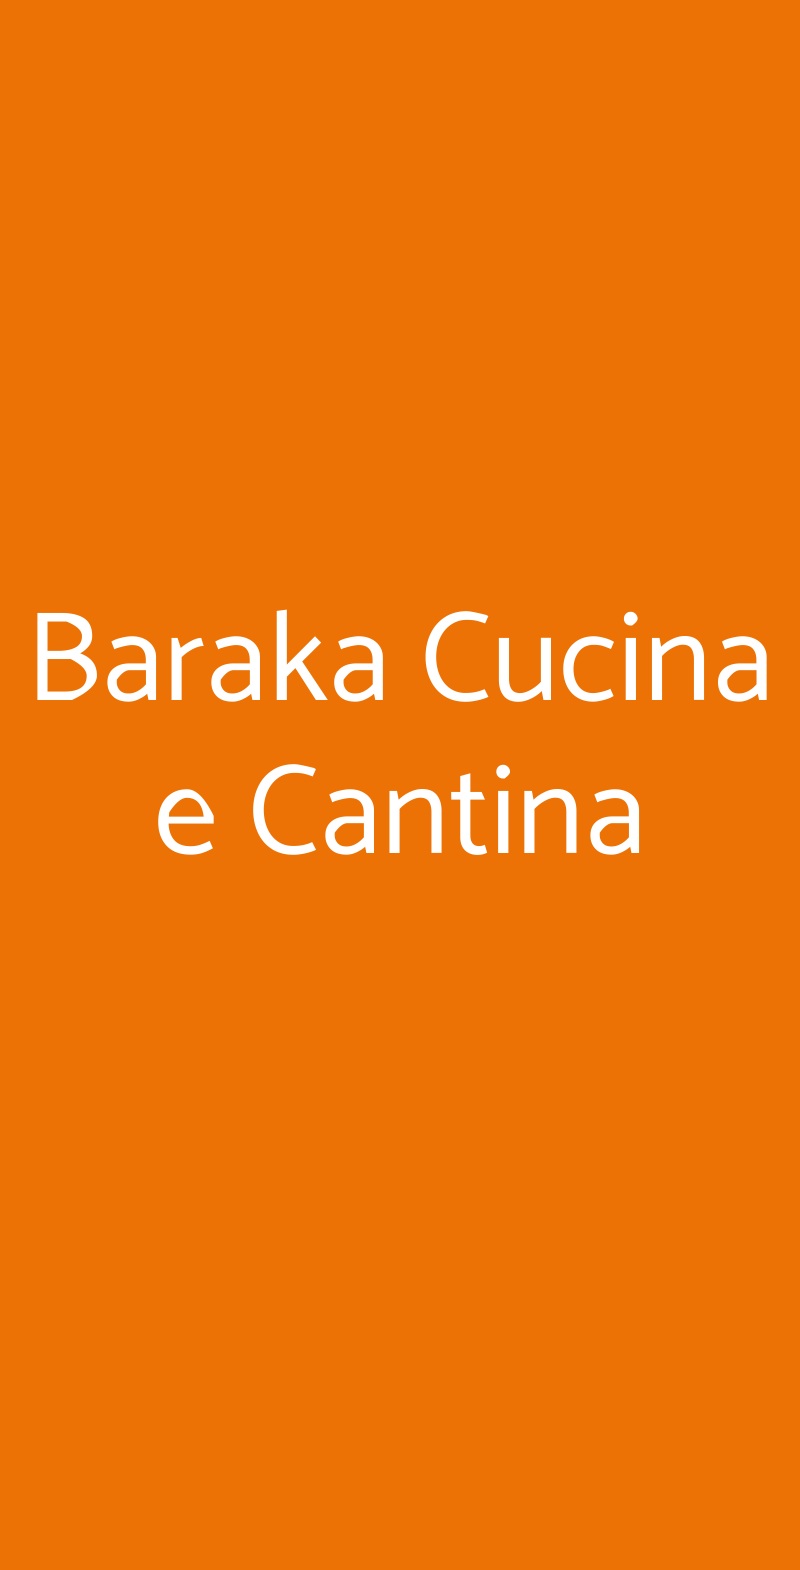 Baraka Cucina e Cantina Lugo menù 1 pagina